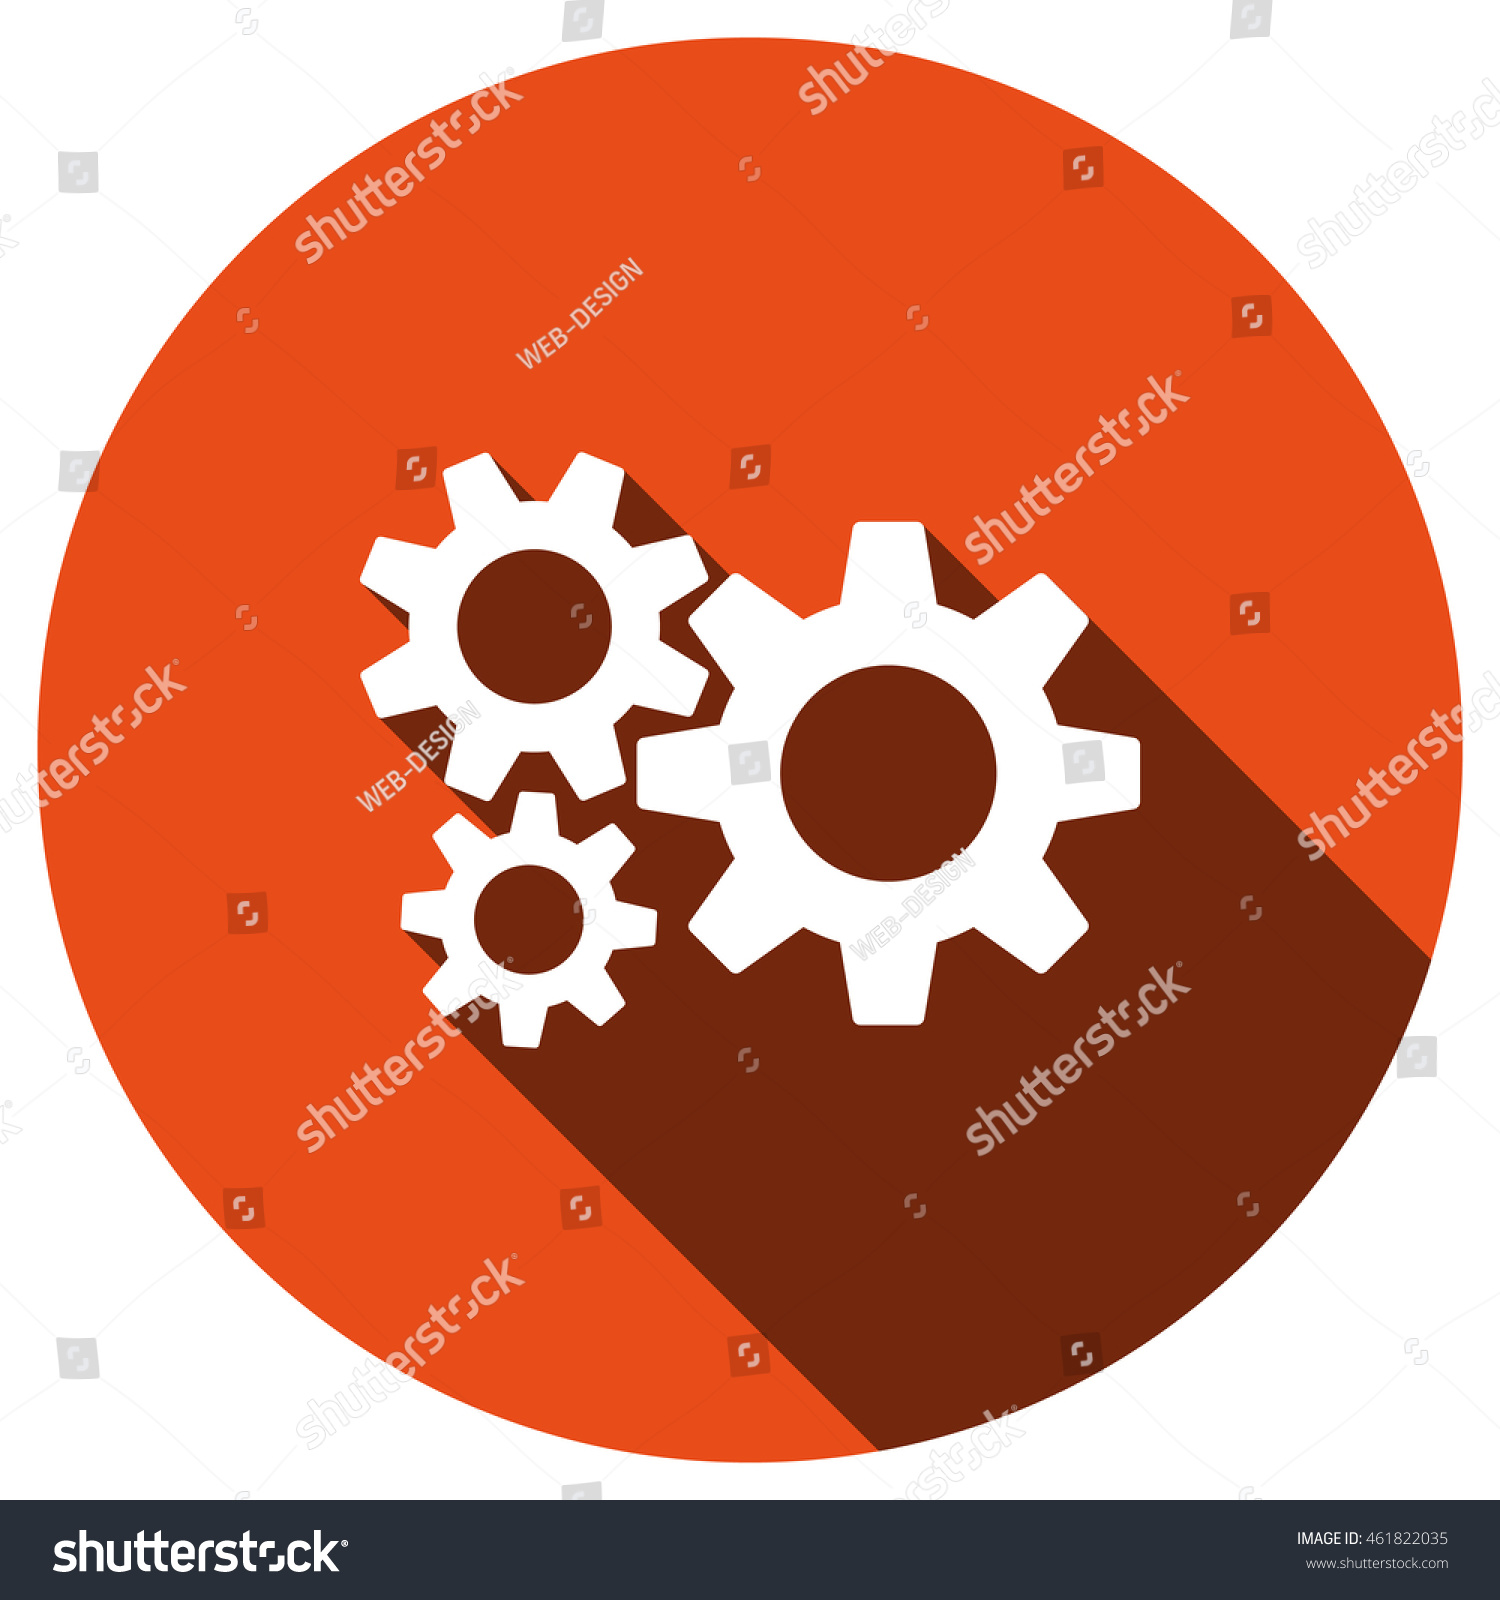 Gear Icon, Vector, Icon Flat - 461822035 : Shutterstock